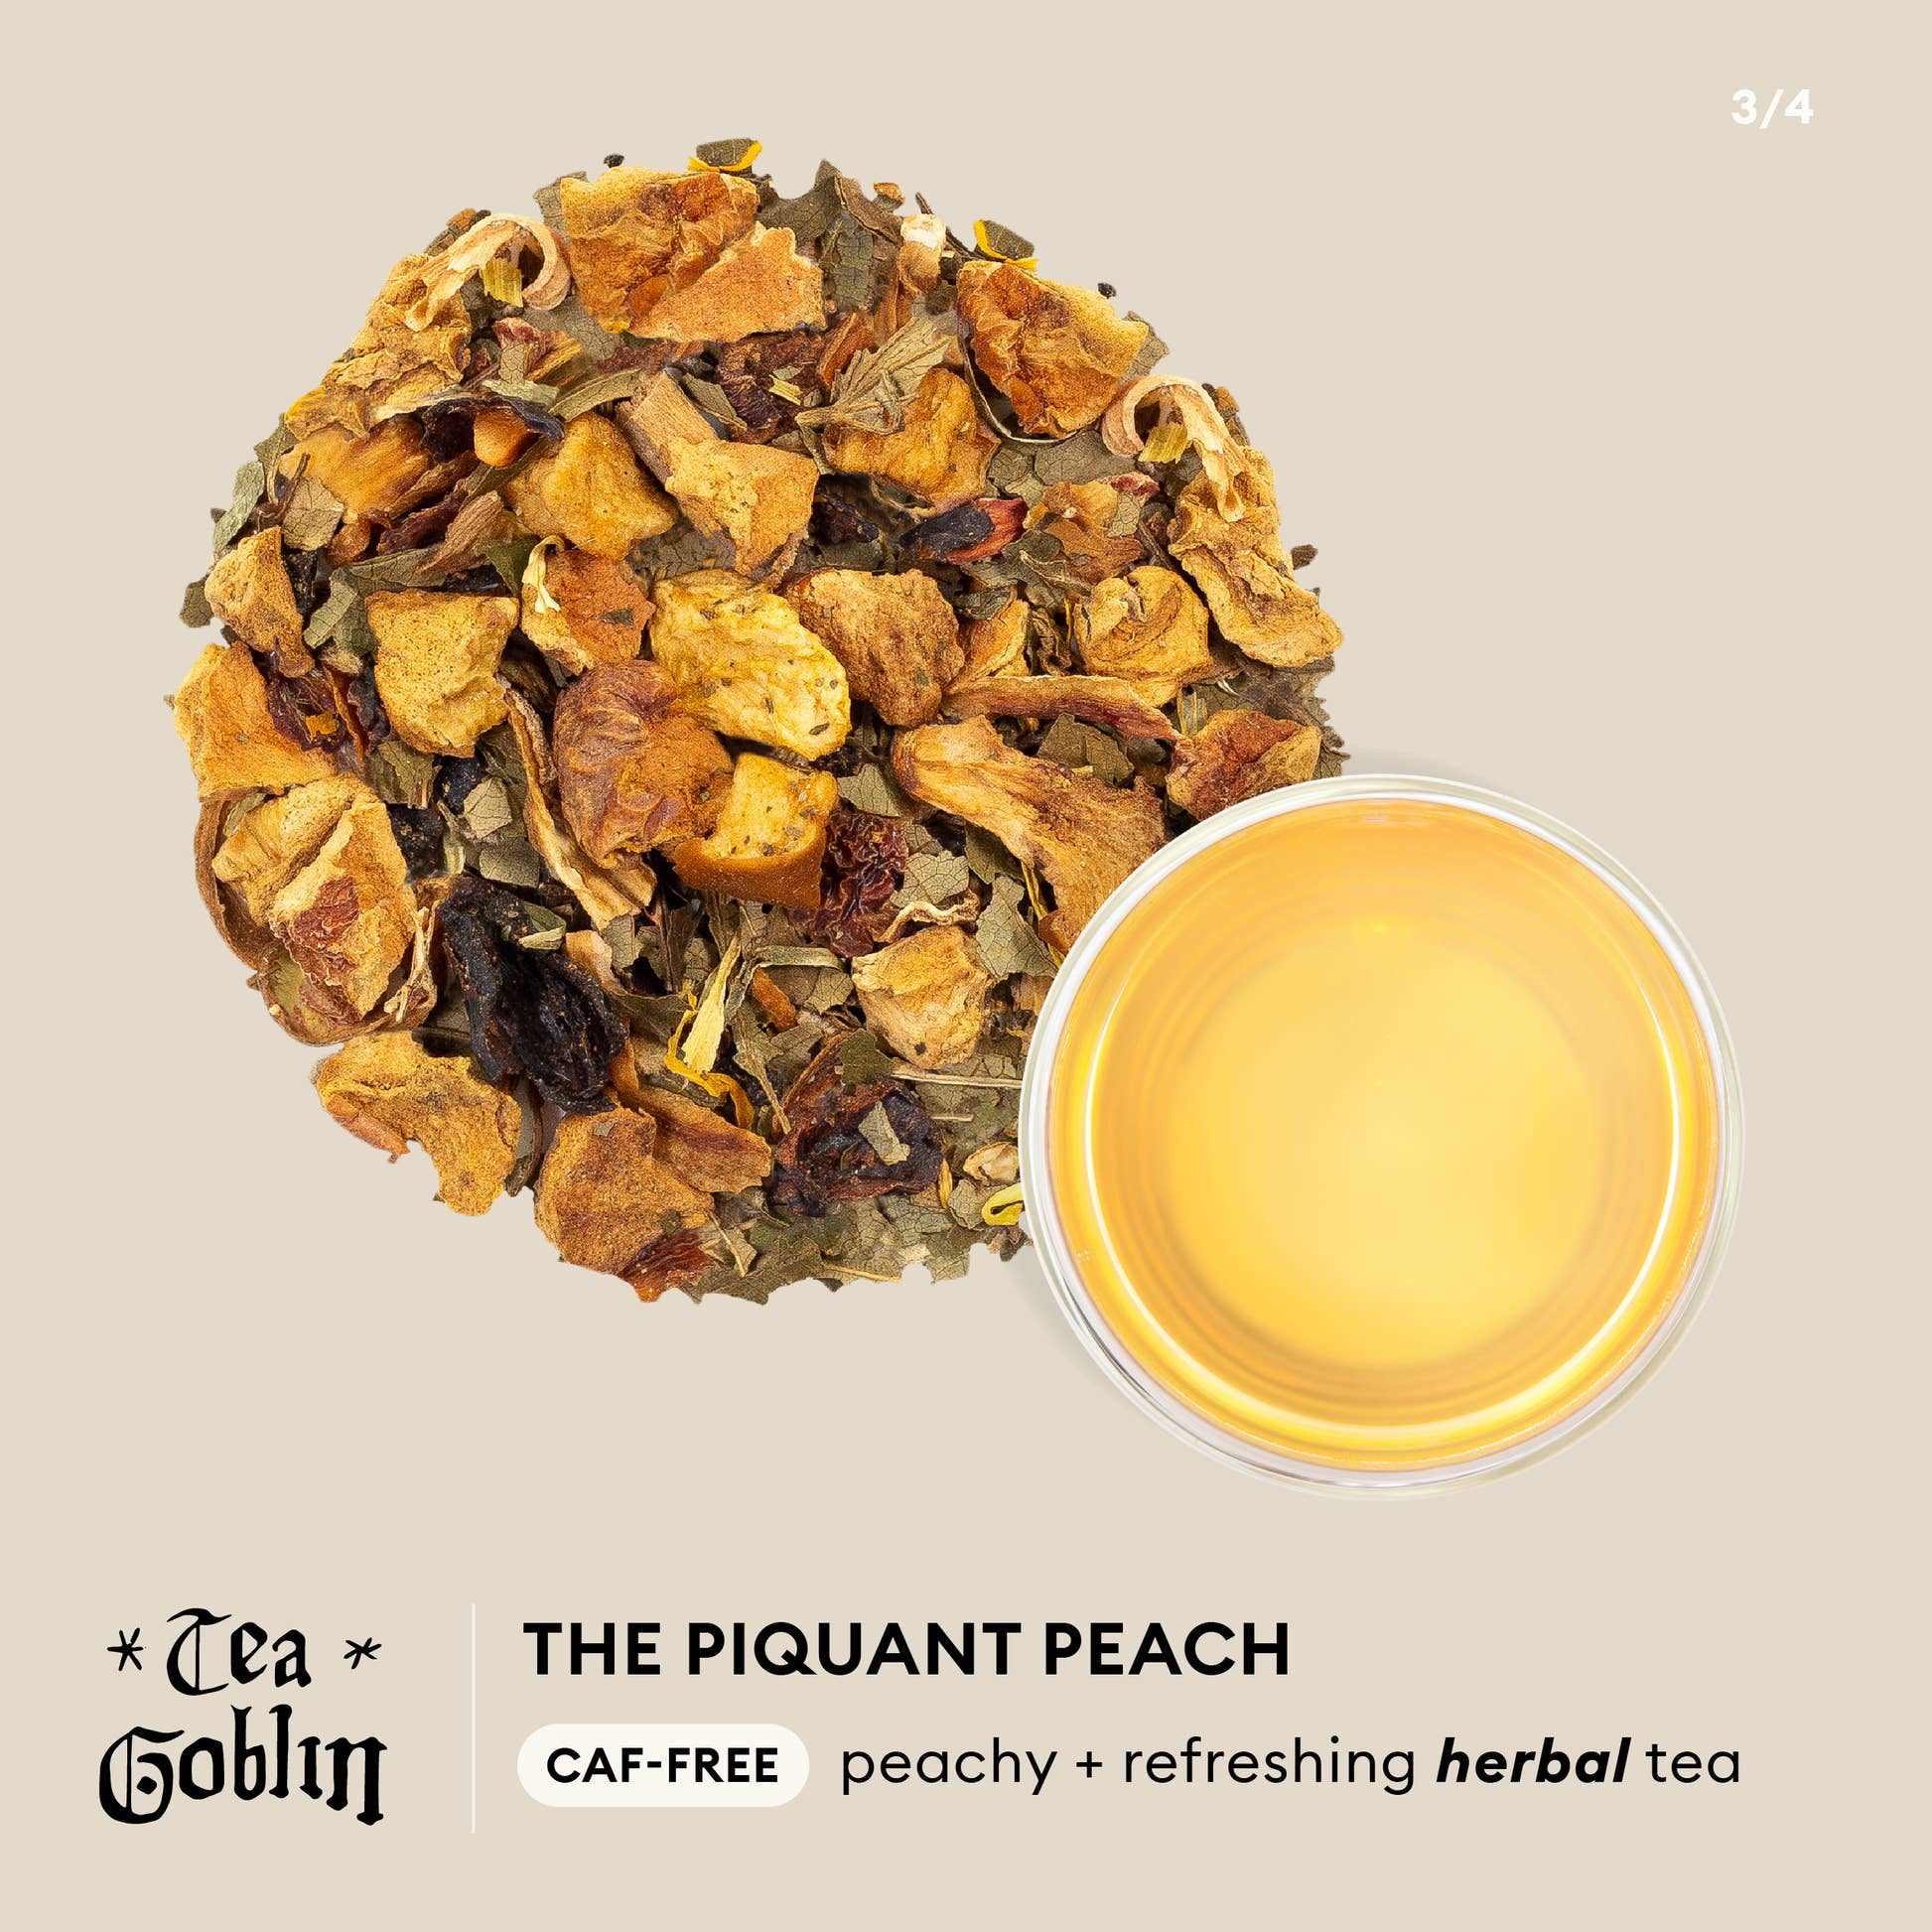 Tea Goblin - The Piquant Peach caf-free, peachy + refreshing herbal tea infographic